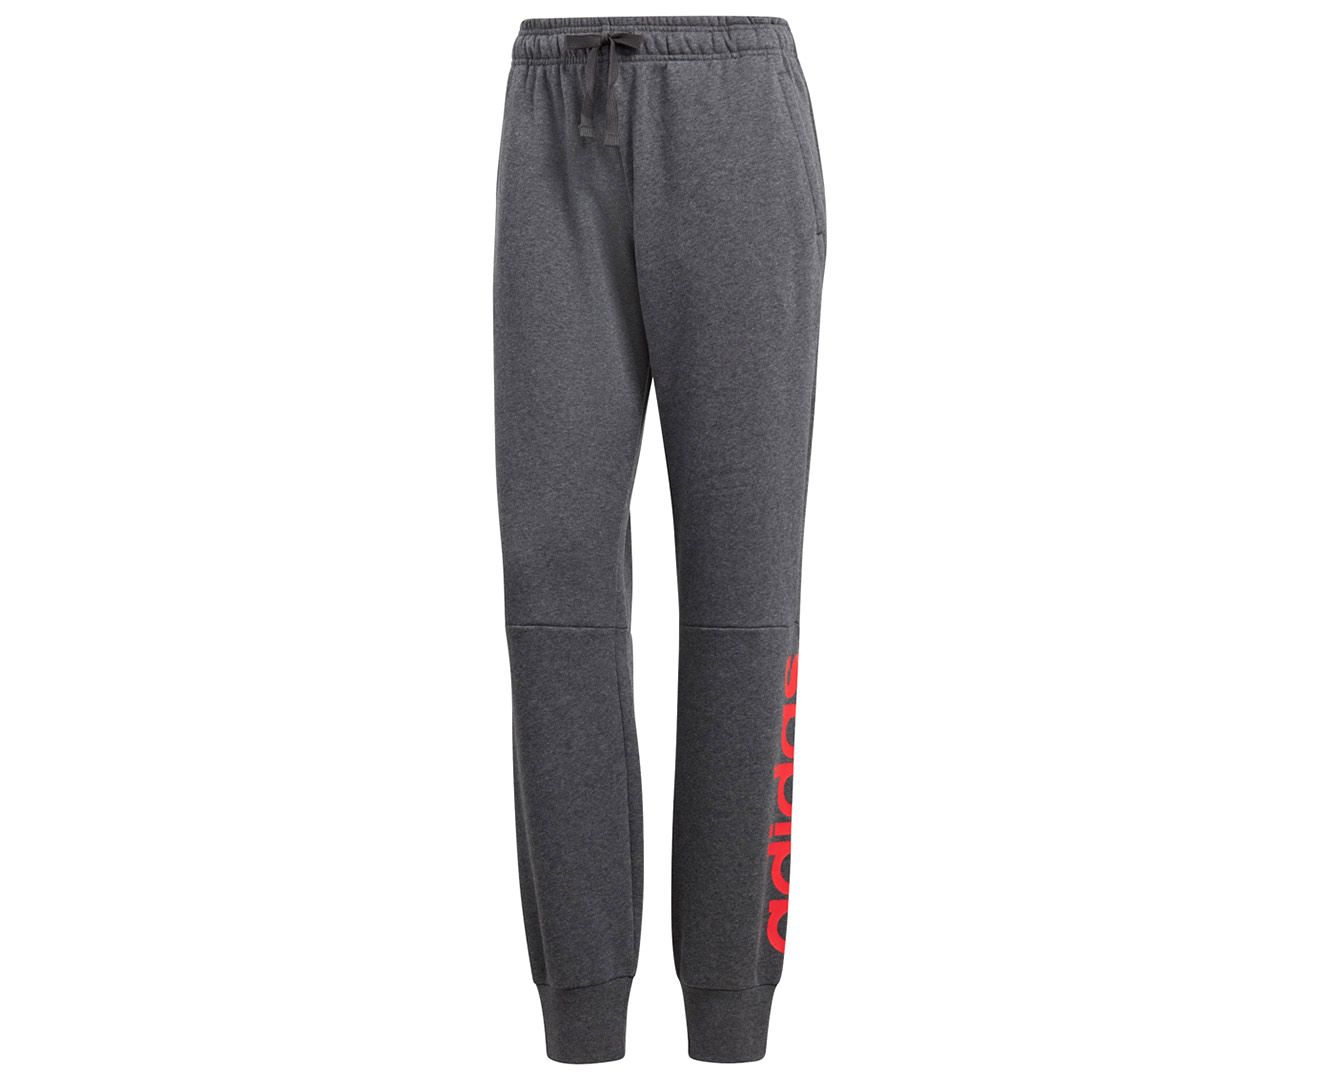 Adidas Women's Essential Linear Fleece Pant - Dark Grey Heather/Real ...